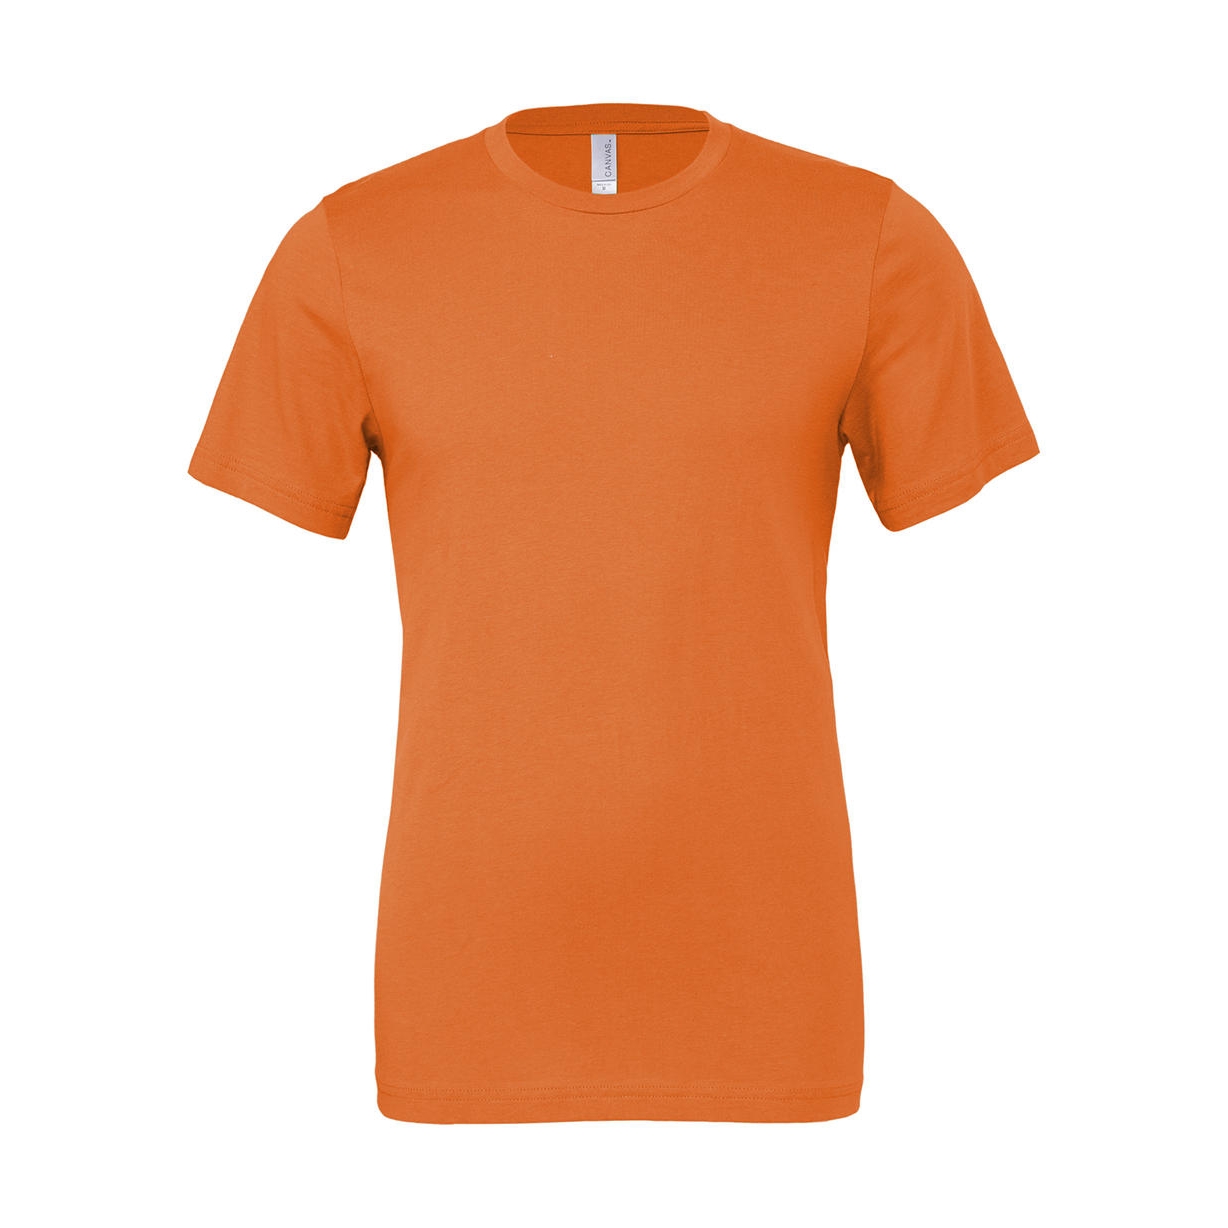 Tričko Bella Jersey - oranžové, XL